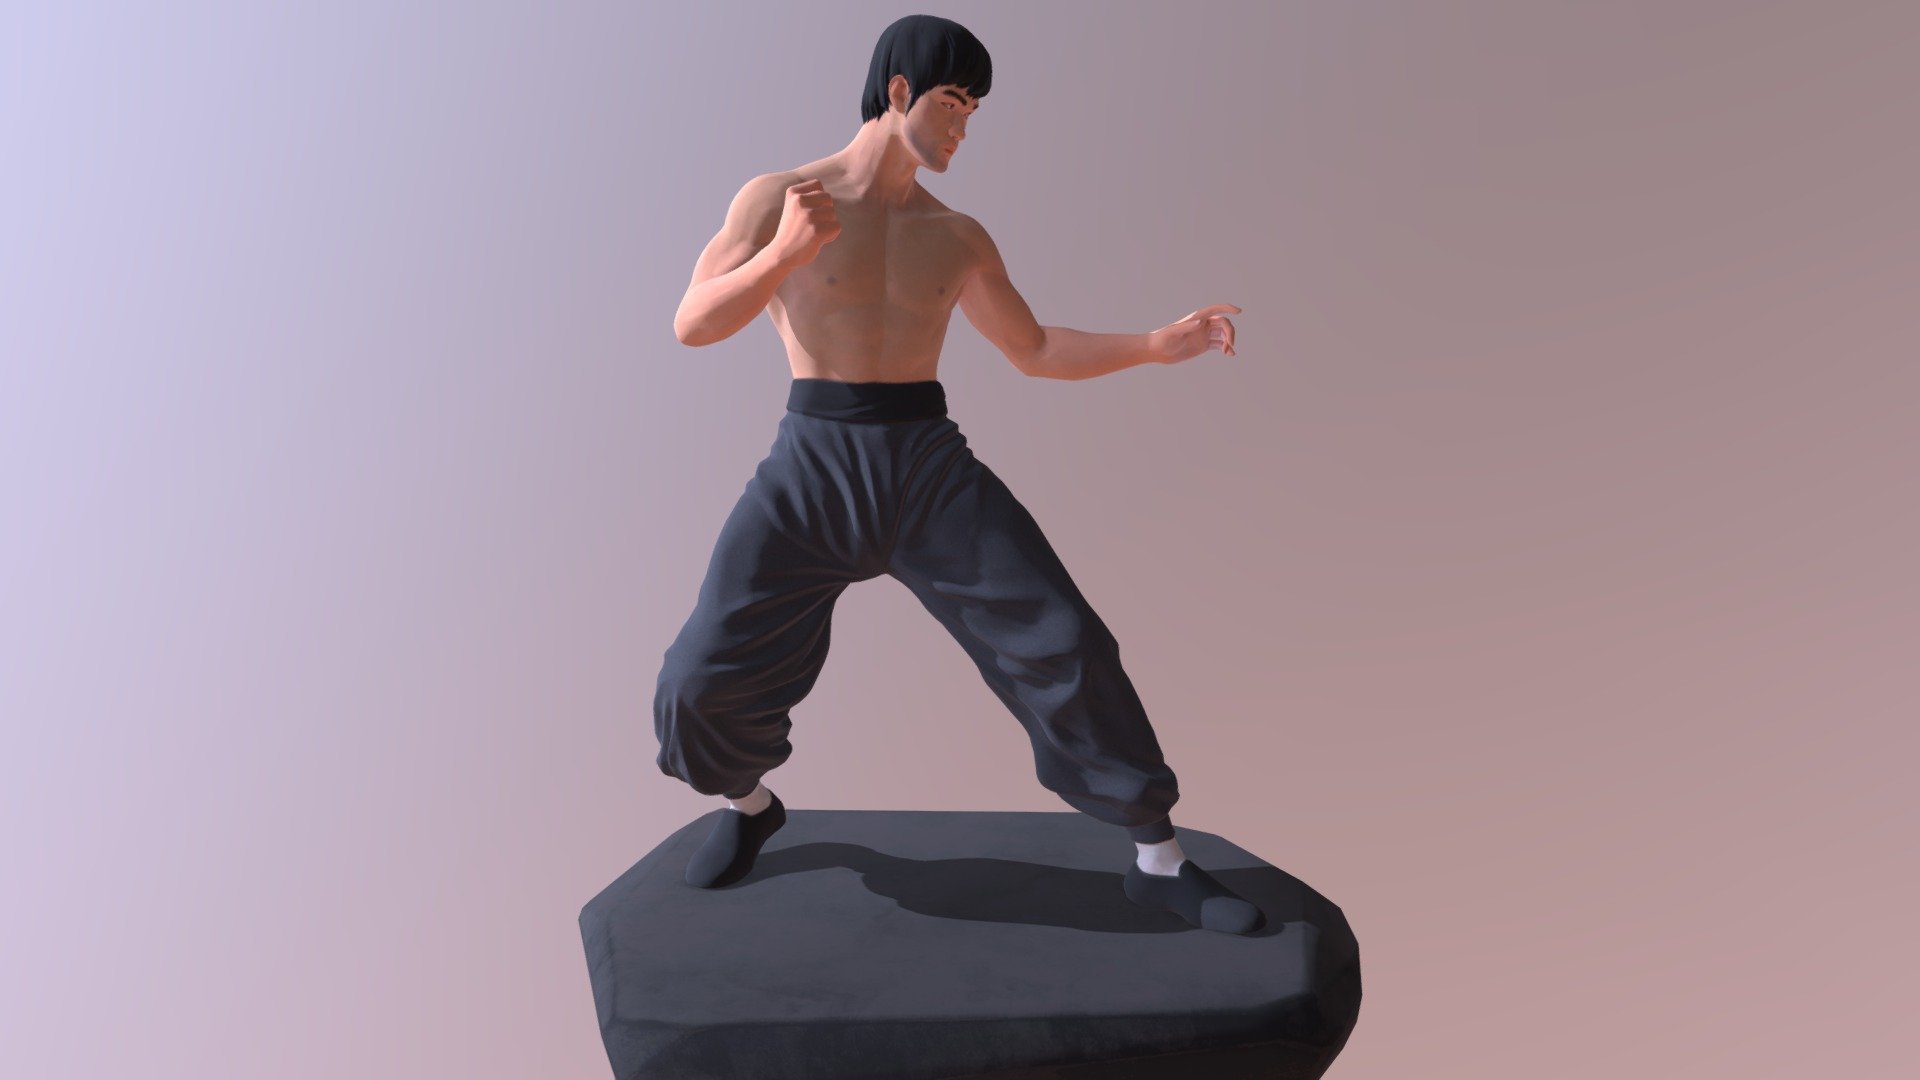 Bruce Lee 3D Model(MAX, OBJ, FBX) - Bruce Lee 3D Model(MAX OBJ FBX) - 3D model by 3dmasterpiece 3d model